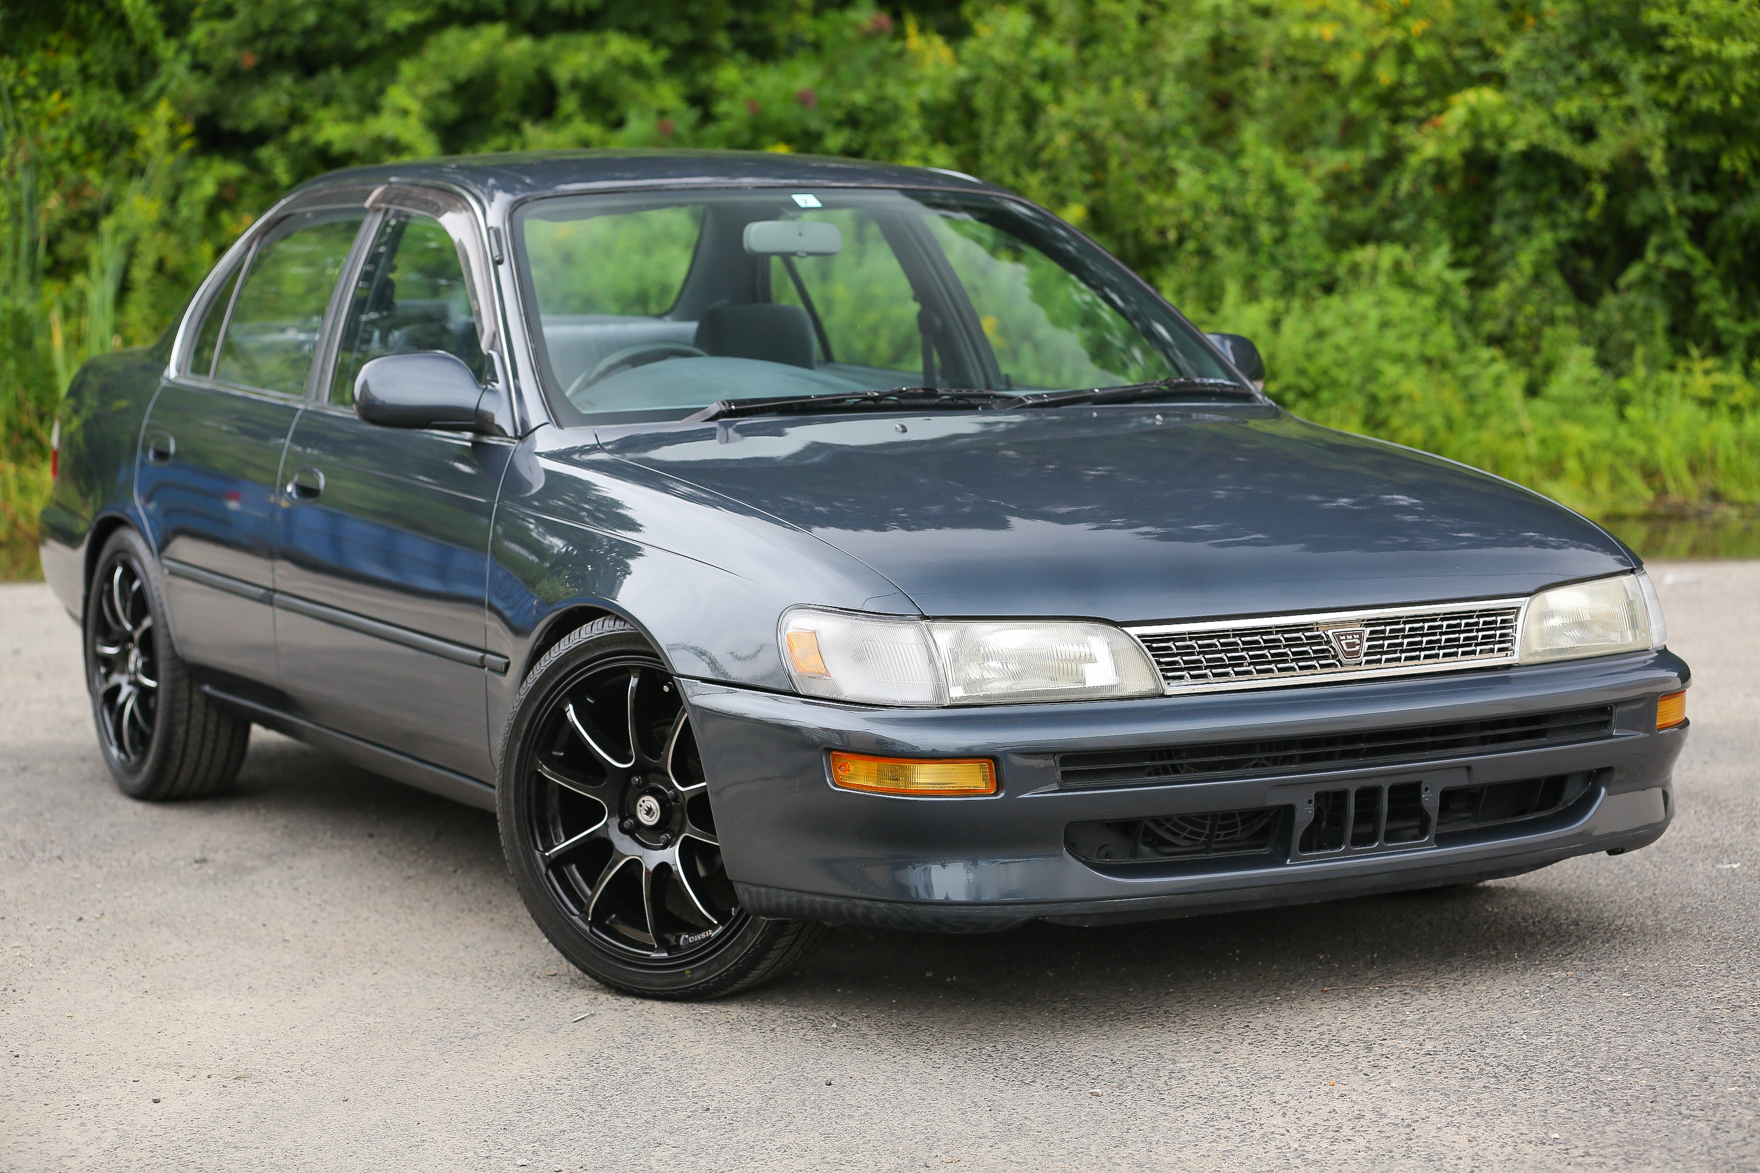 1995 Toyota Corolla LX Limited - $9,300